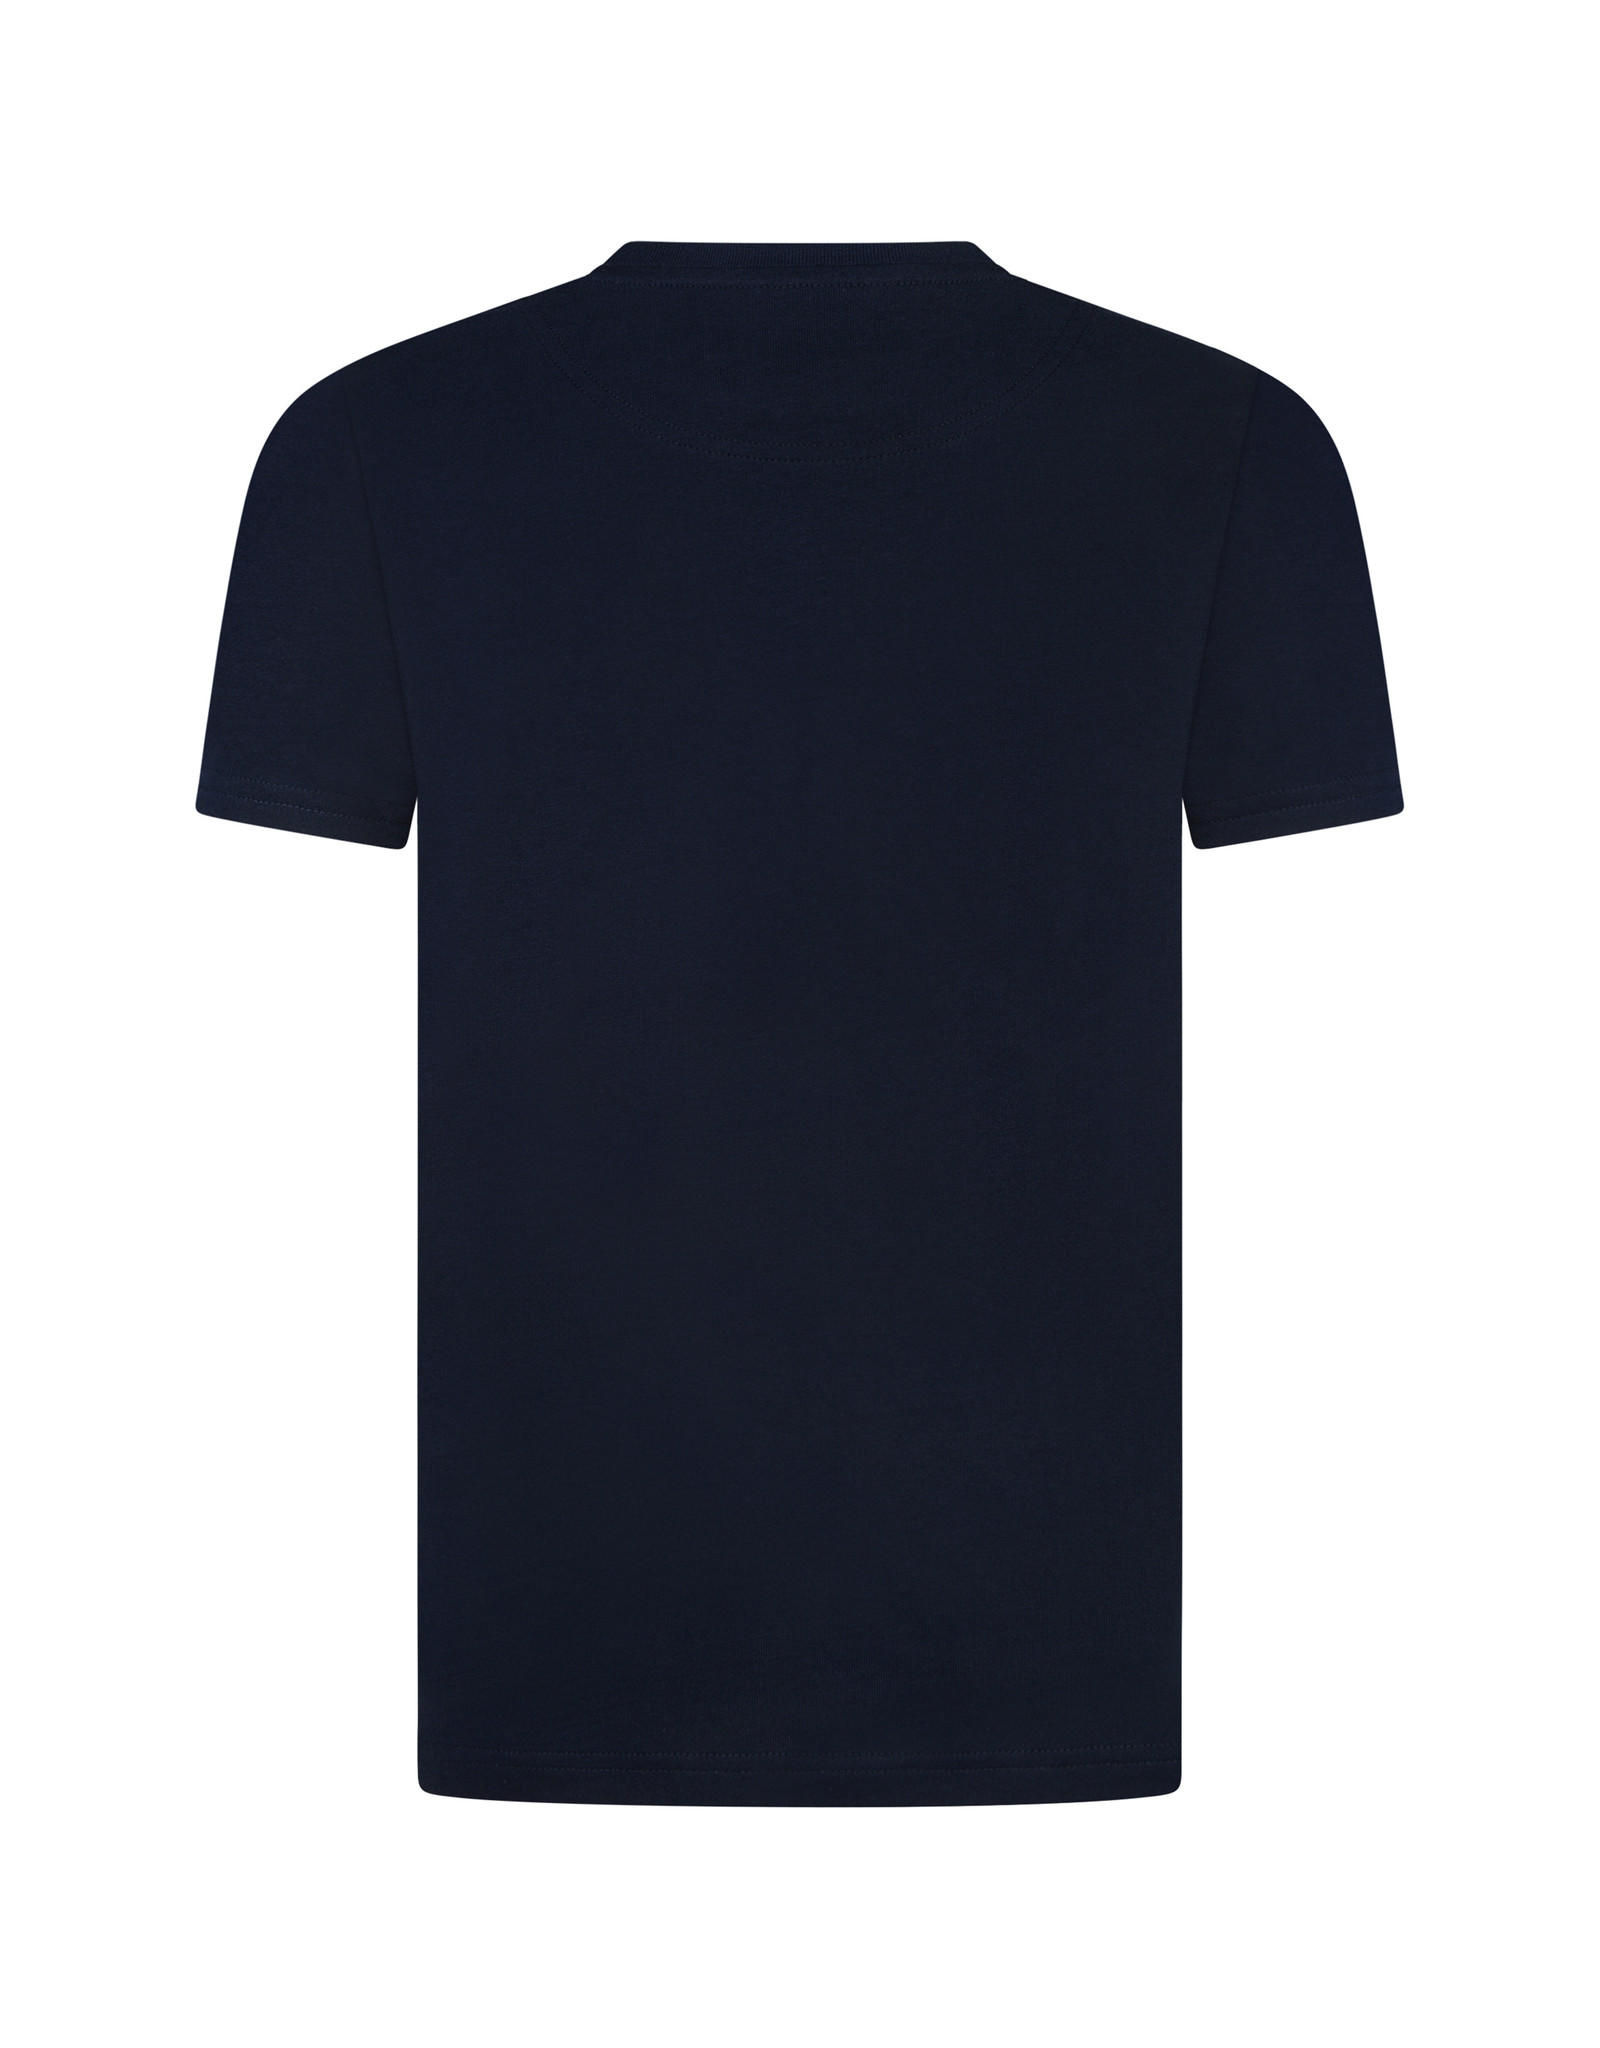 Lyle & Scott Boys Classic T-Shirt Navy Blazer